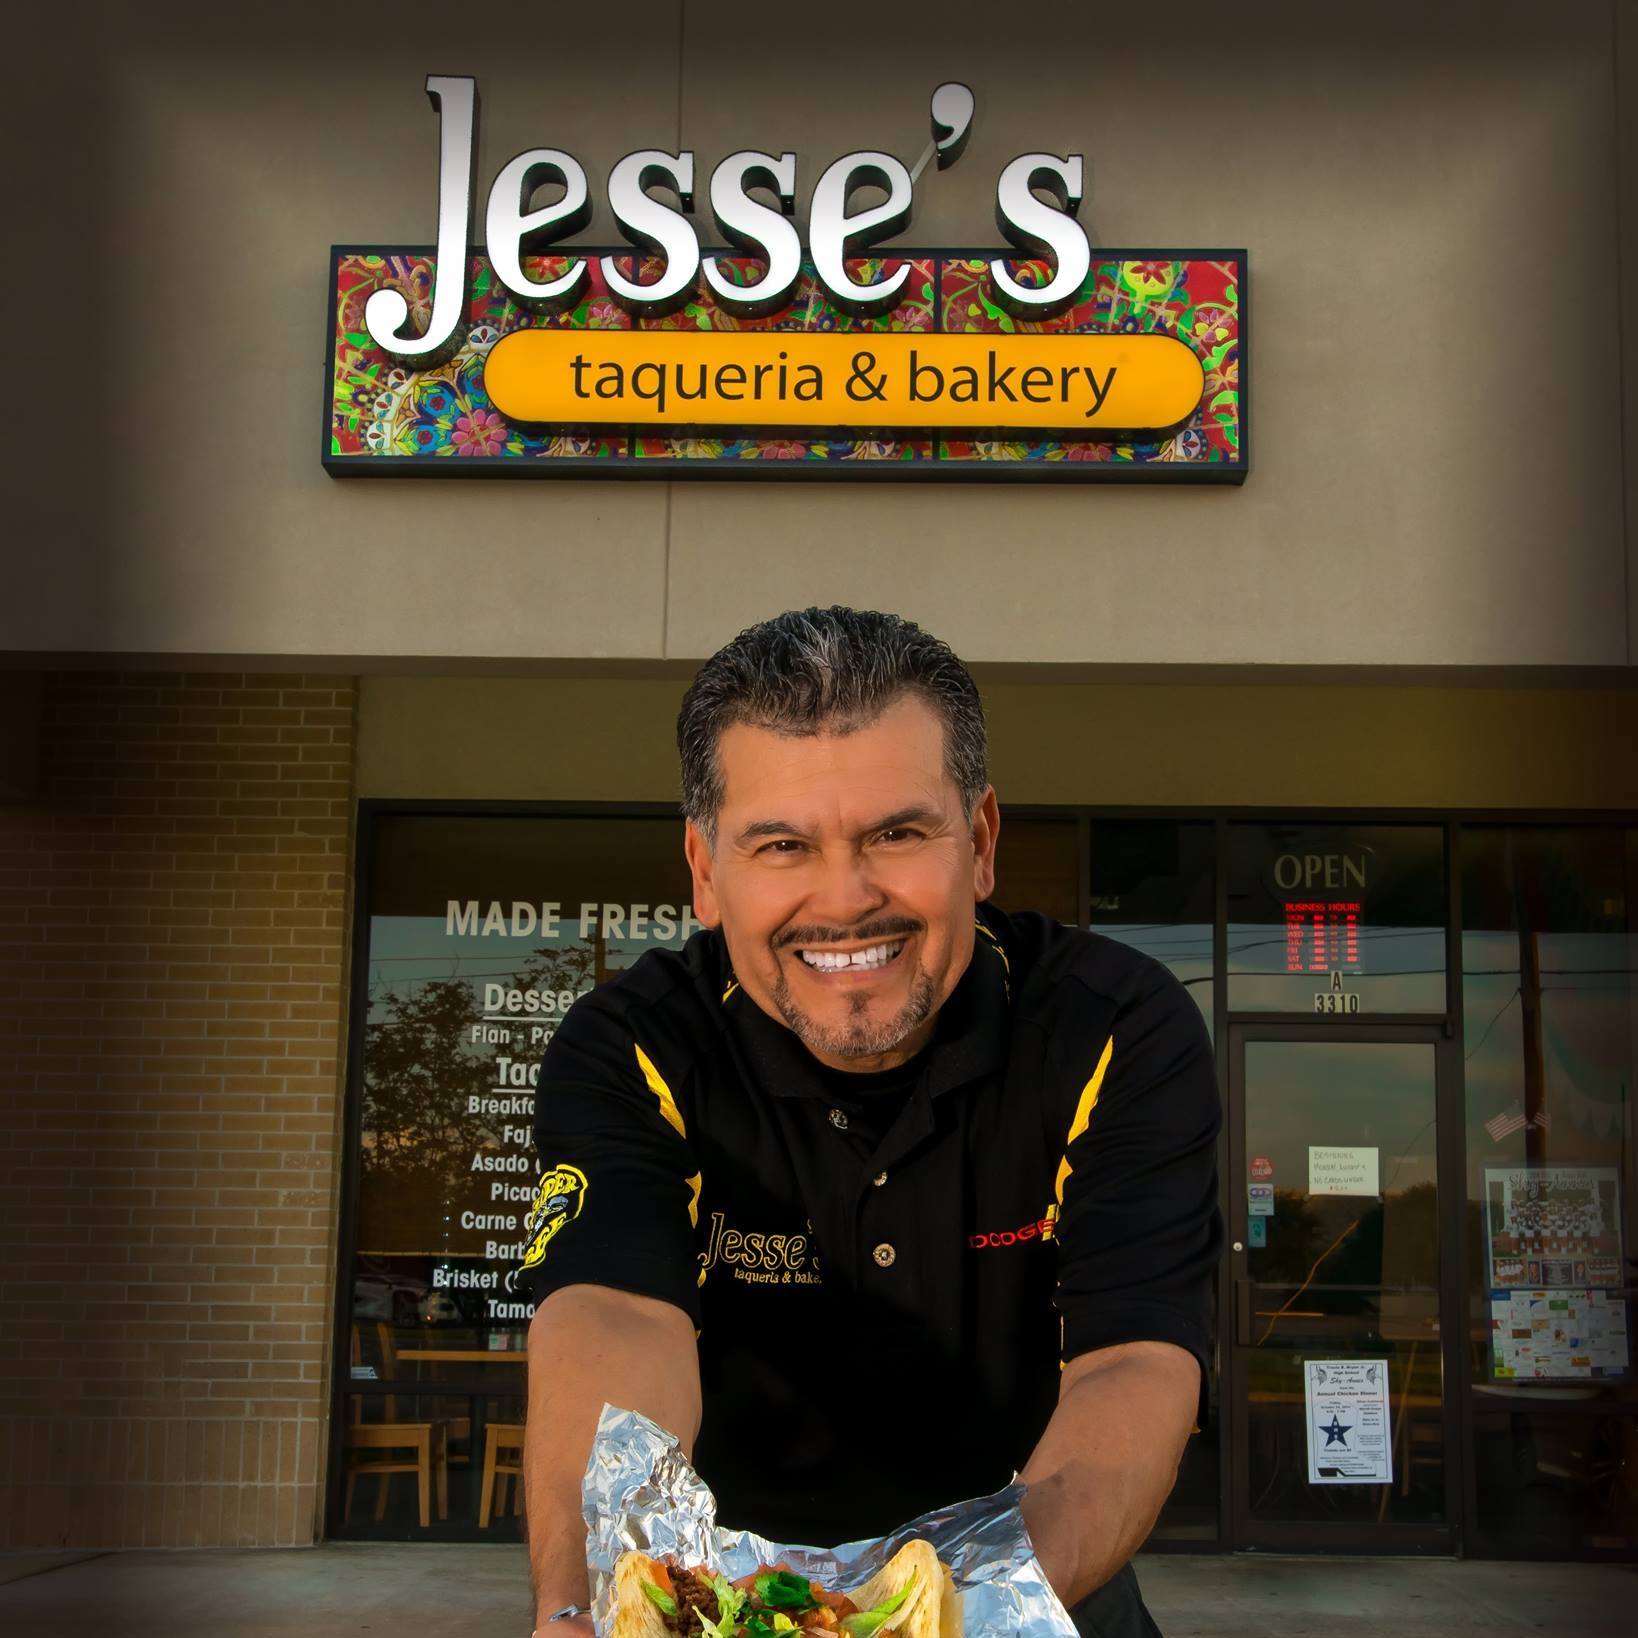 Jesse of Jesse's Taqueria & Bakery